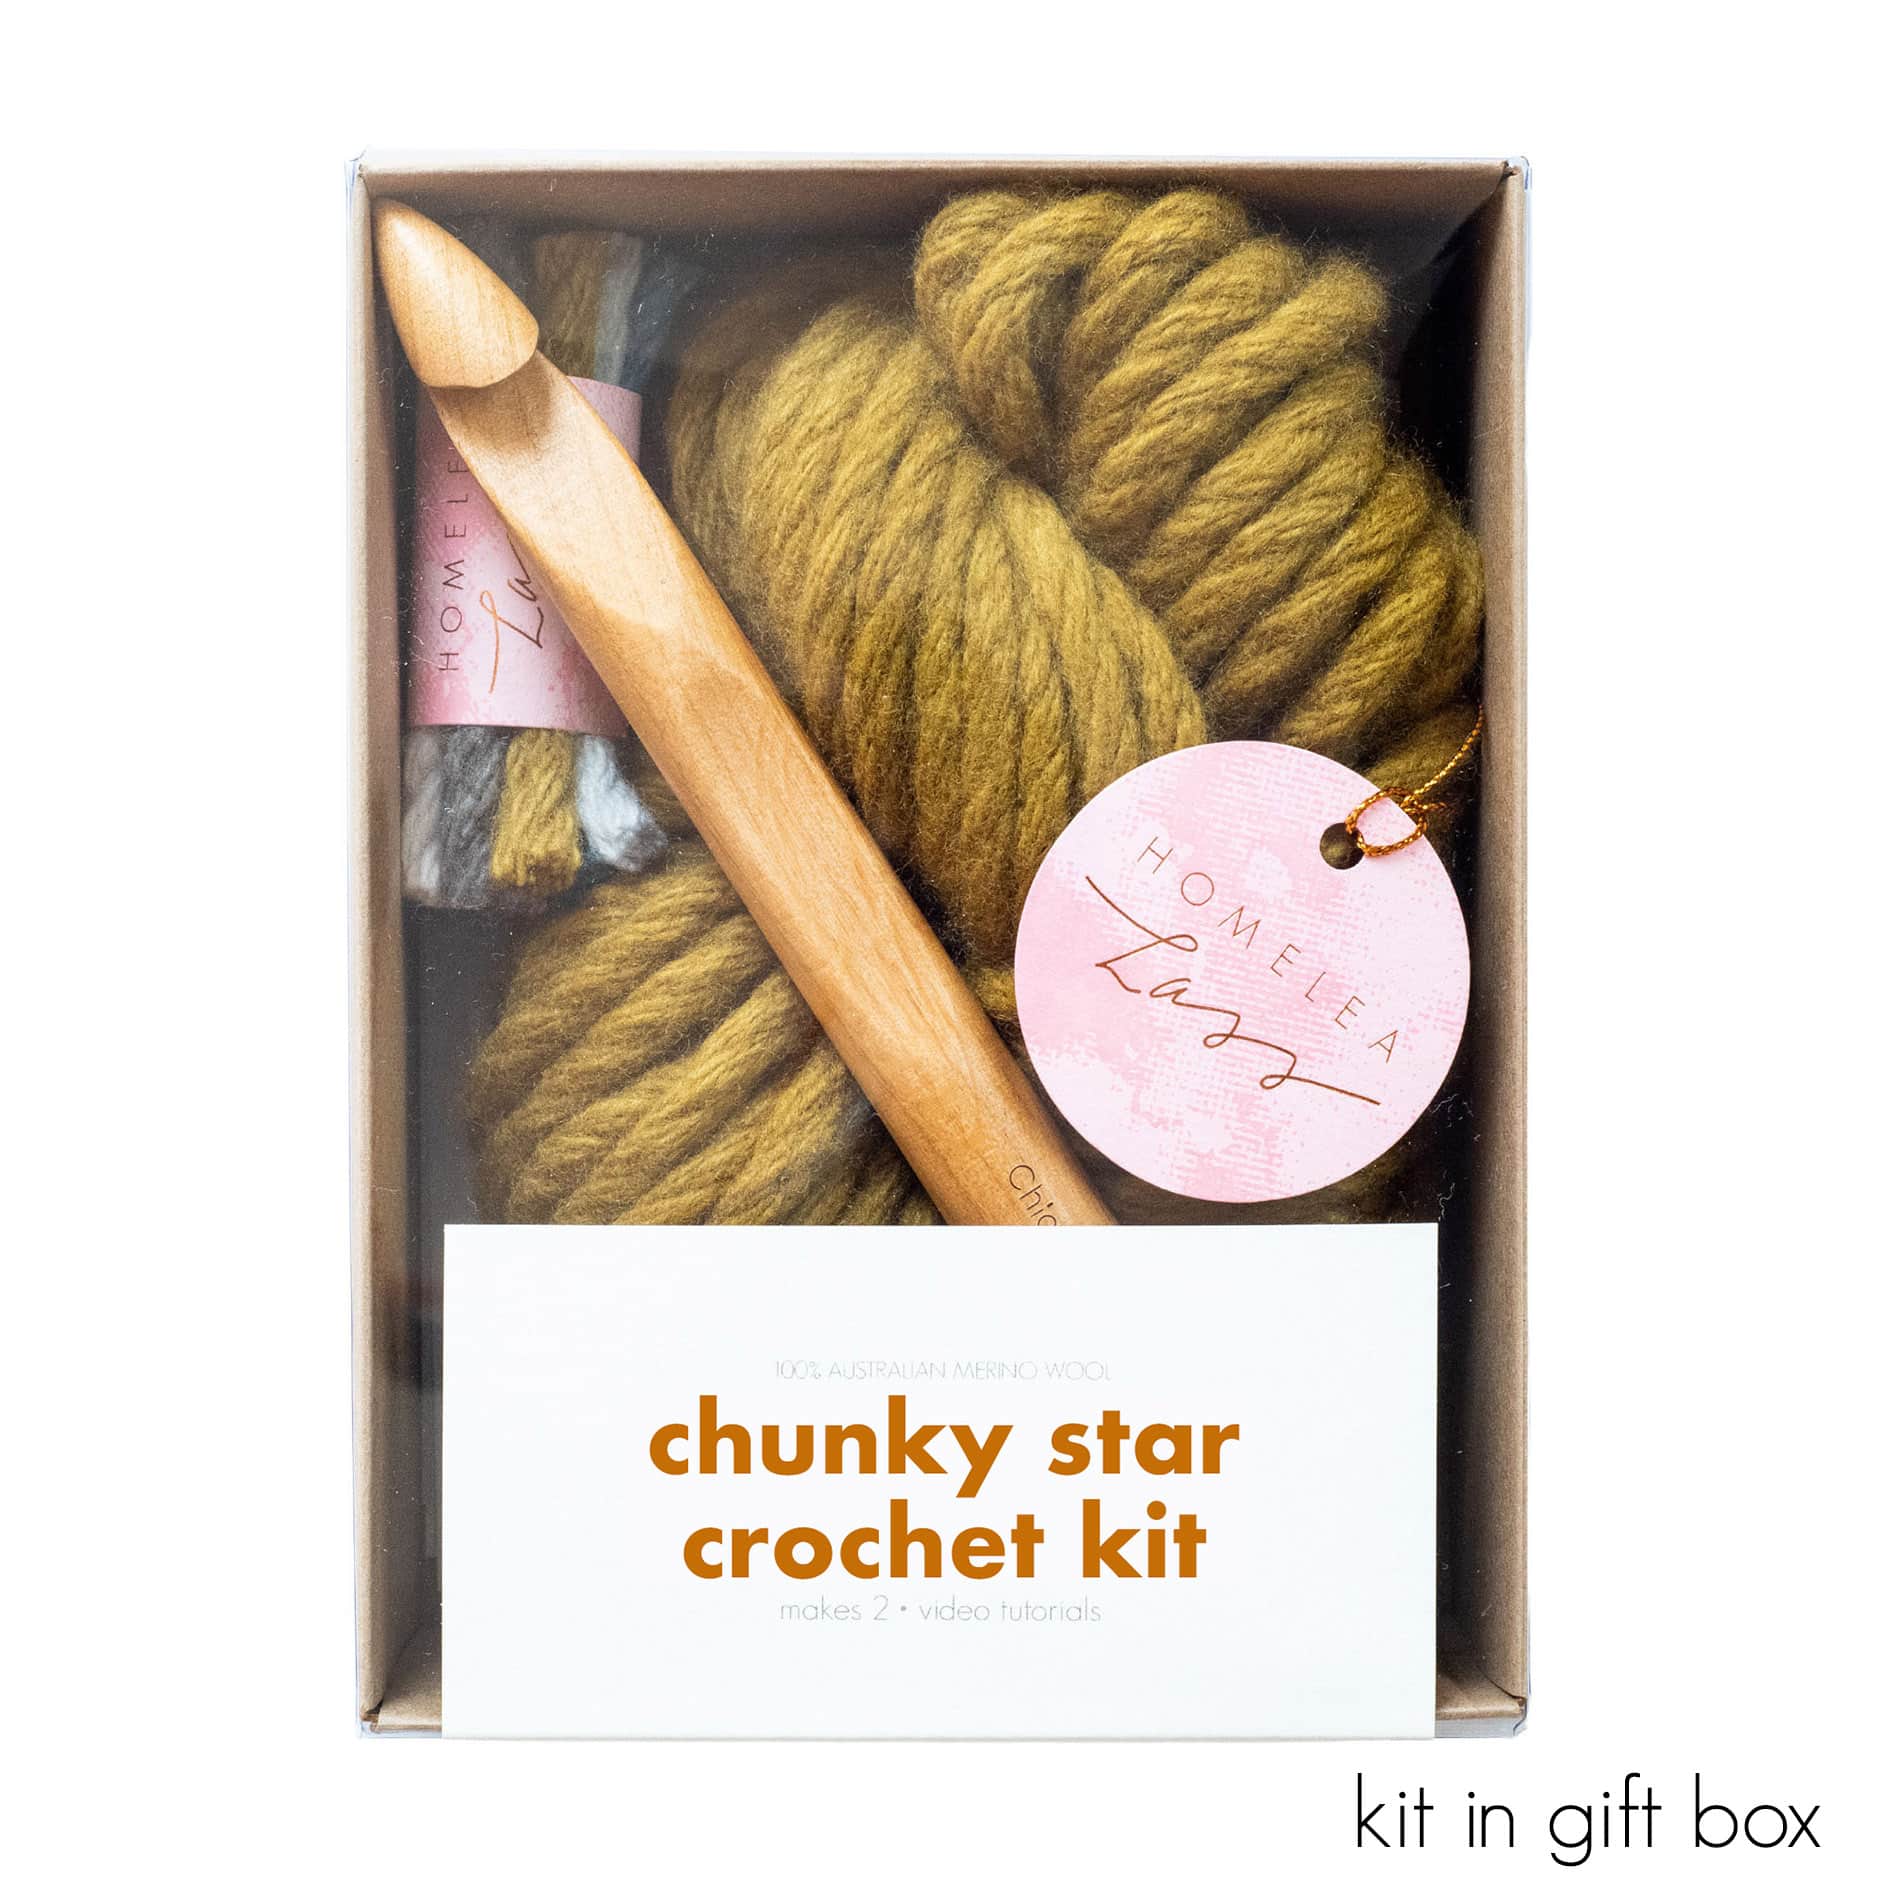 Chunky Star Crochet Kit in gift box | Homelea Lass contemporary crochet